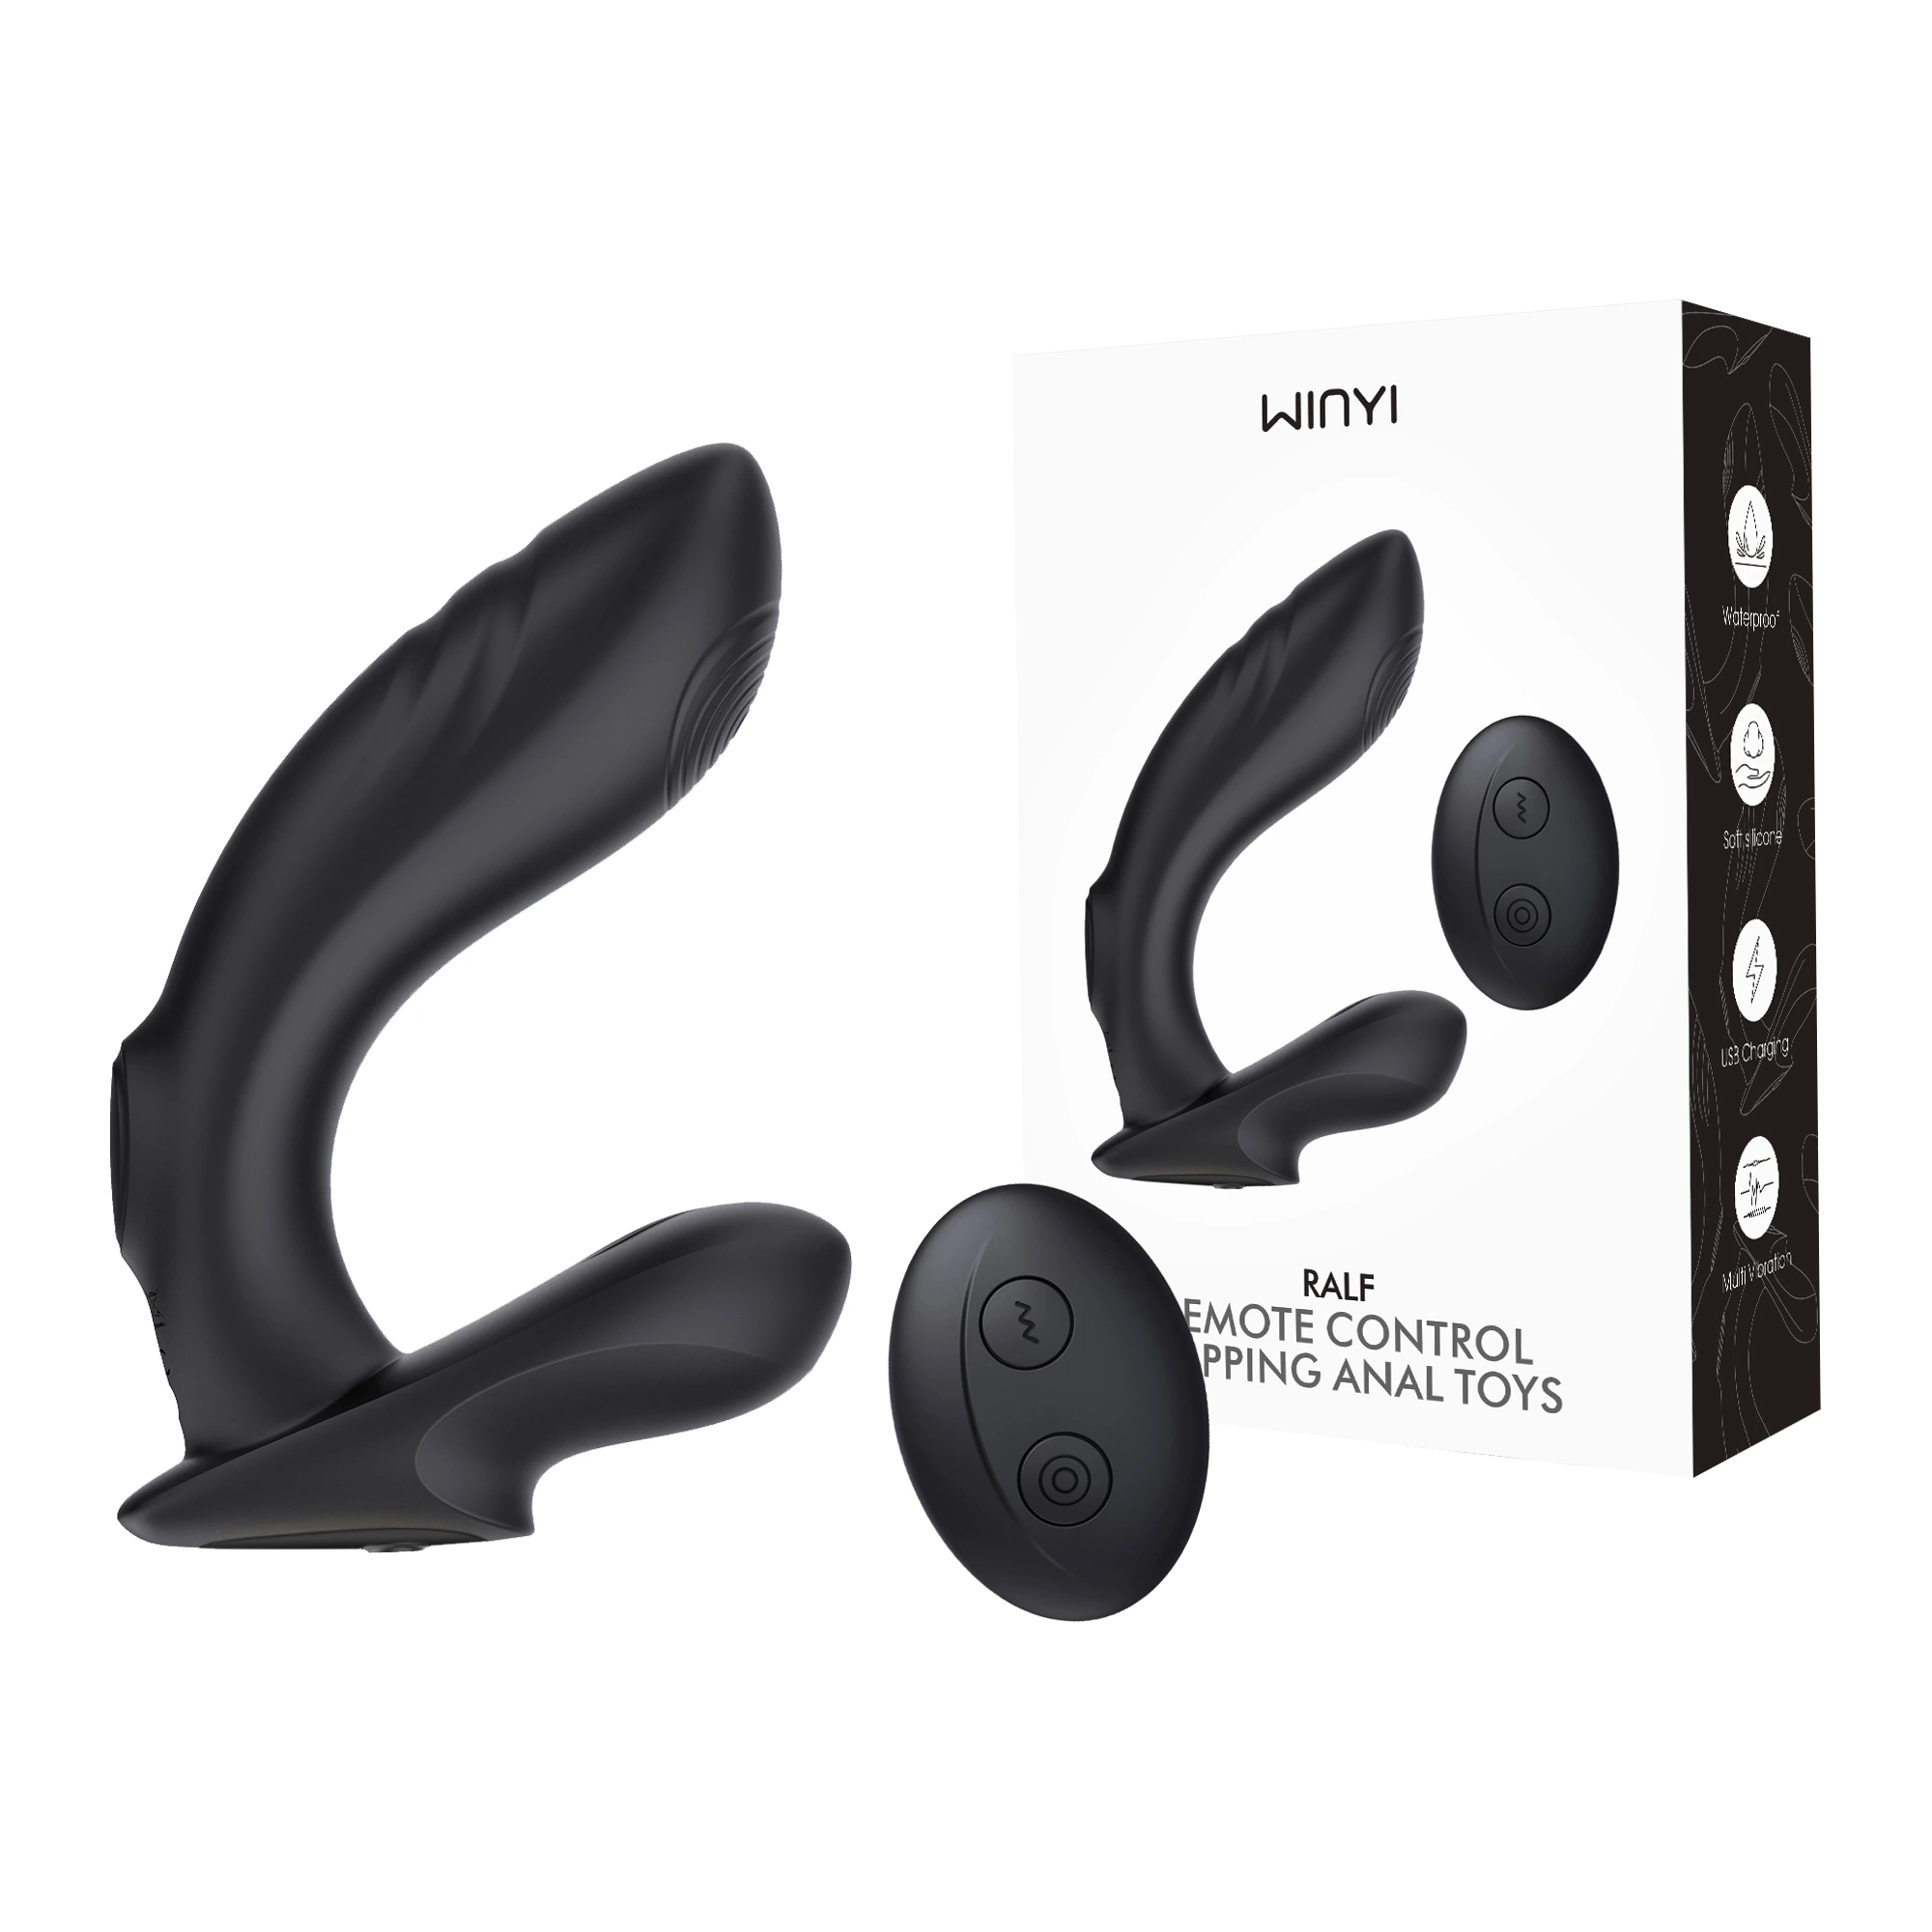 WY0570 RALF - Remote control Slapping prostate massager-szwinyi.com- Slapping Anal Butt Plug